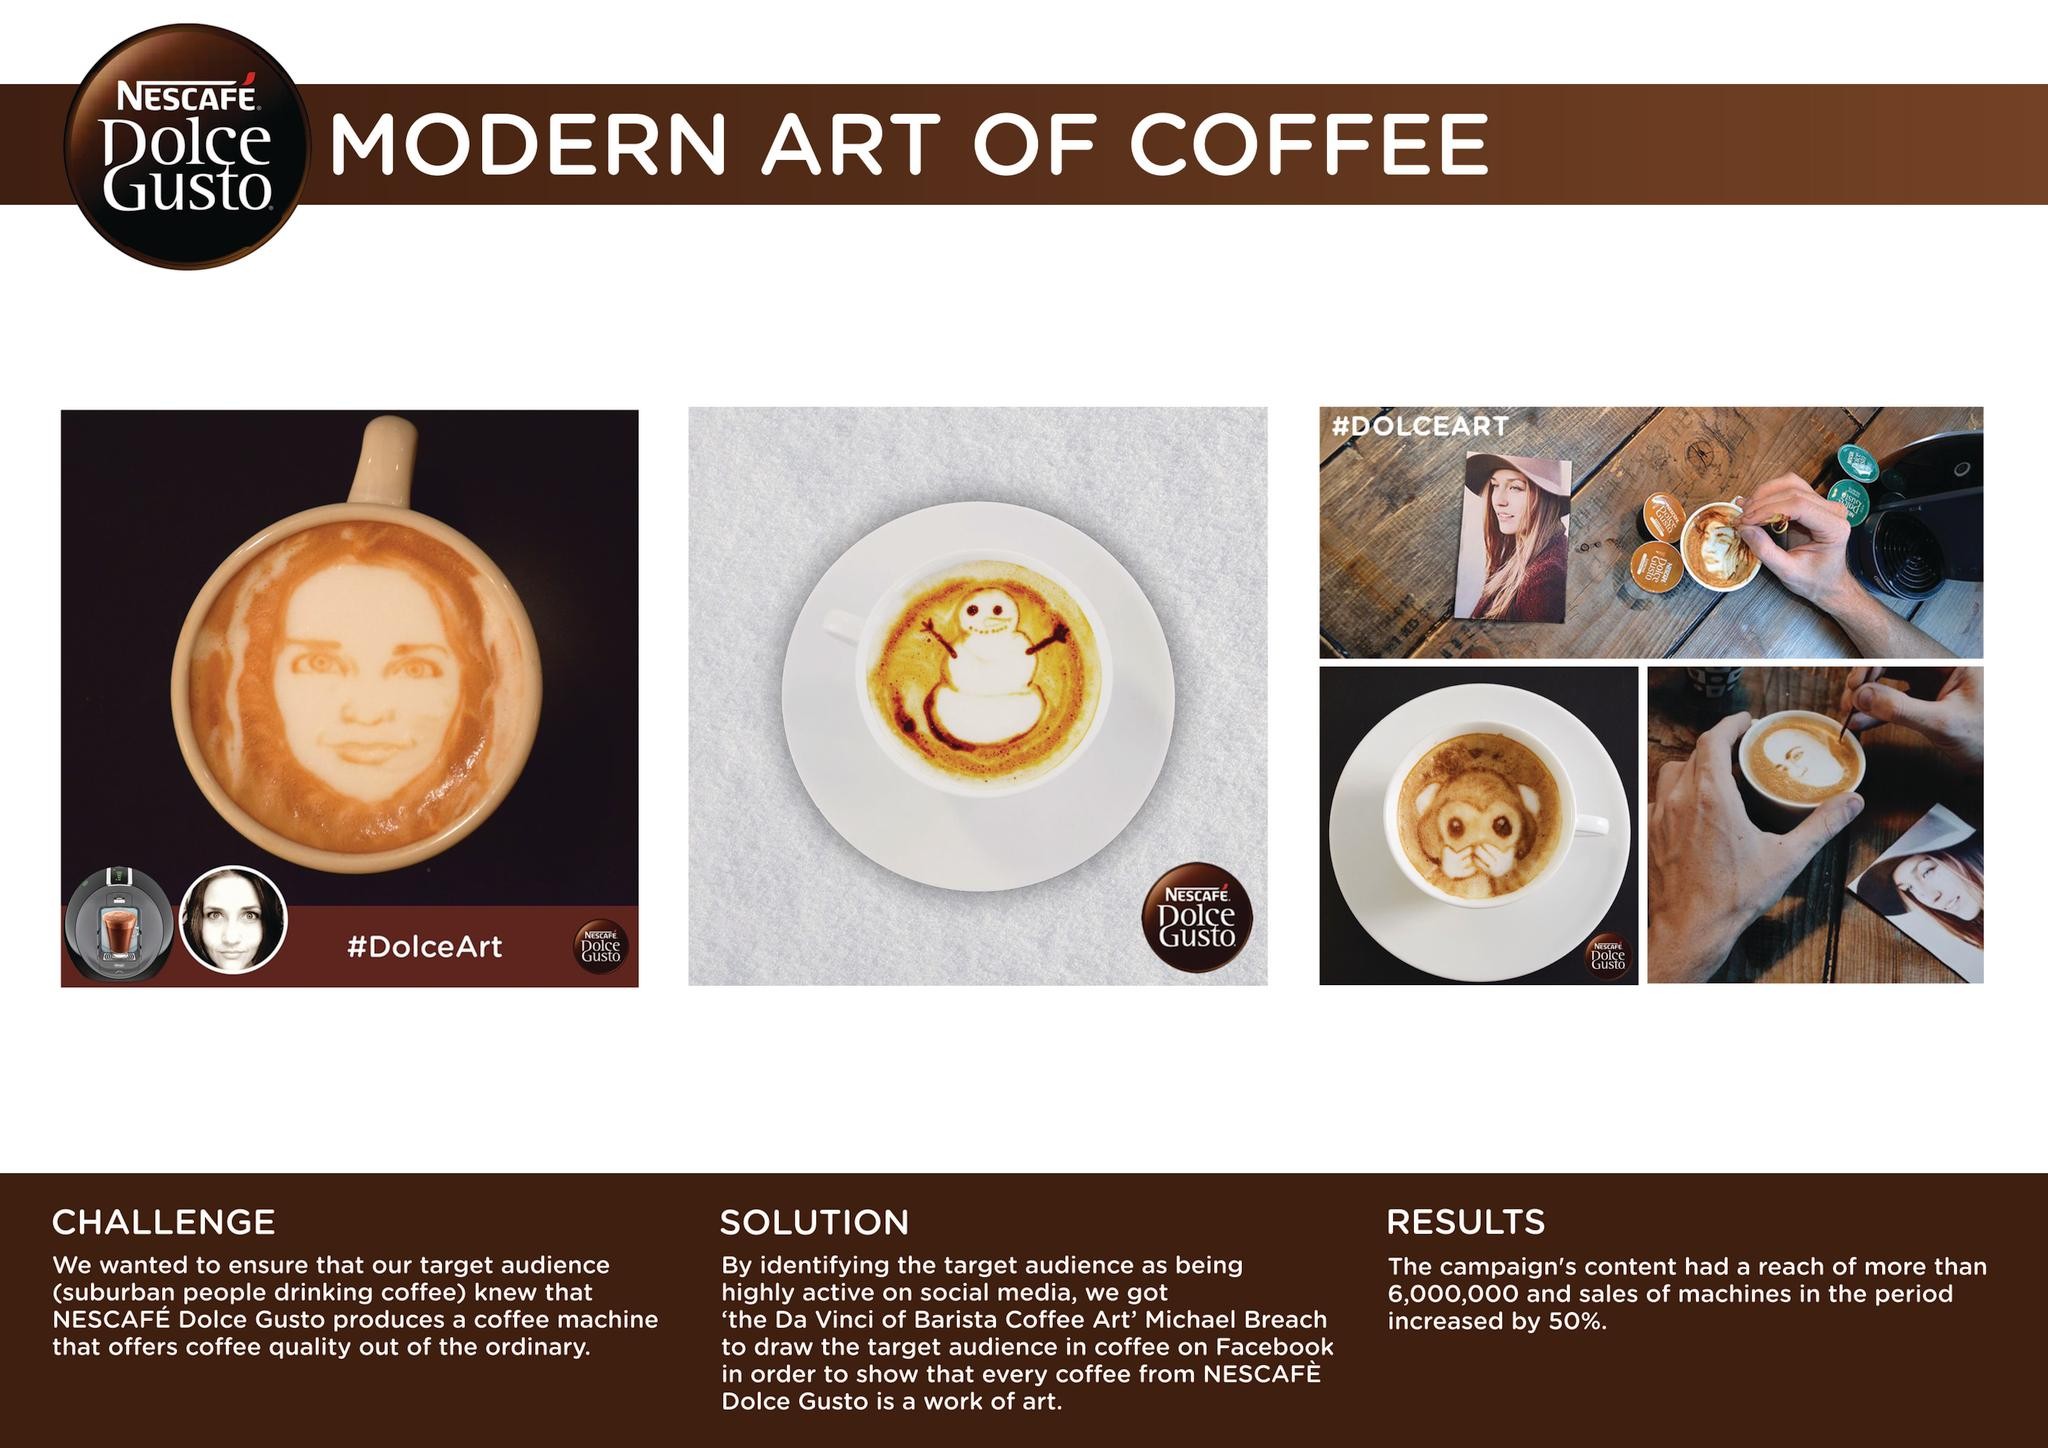 THE MODERN ART OF COFFEE